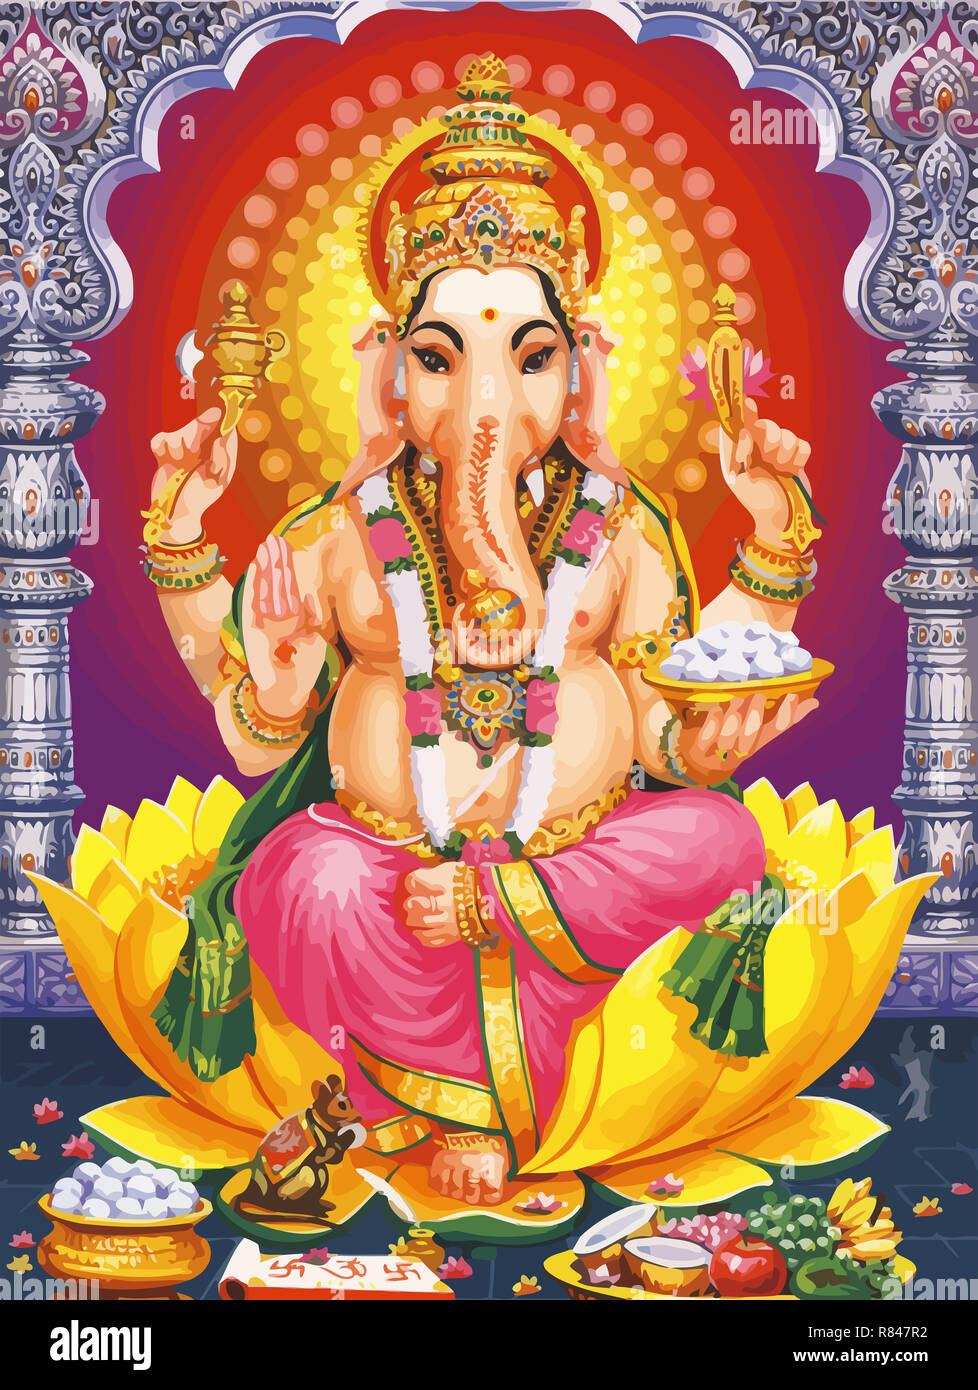 Ganesha hindu temple lord faith mythology bless god fruits offers ...